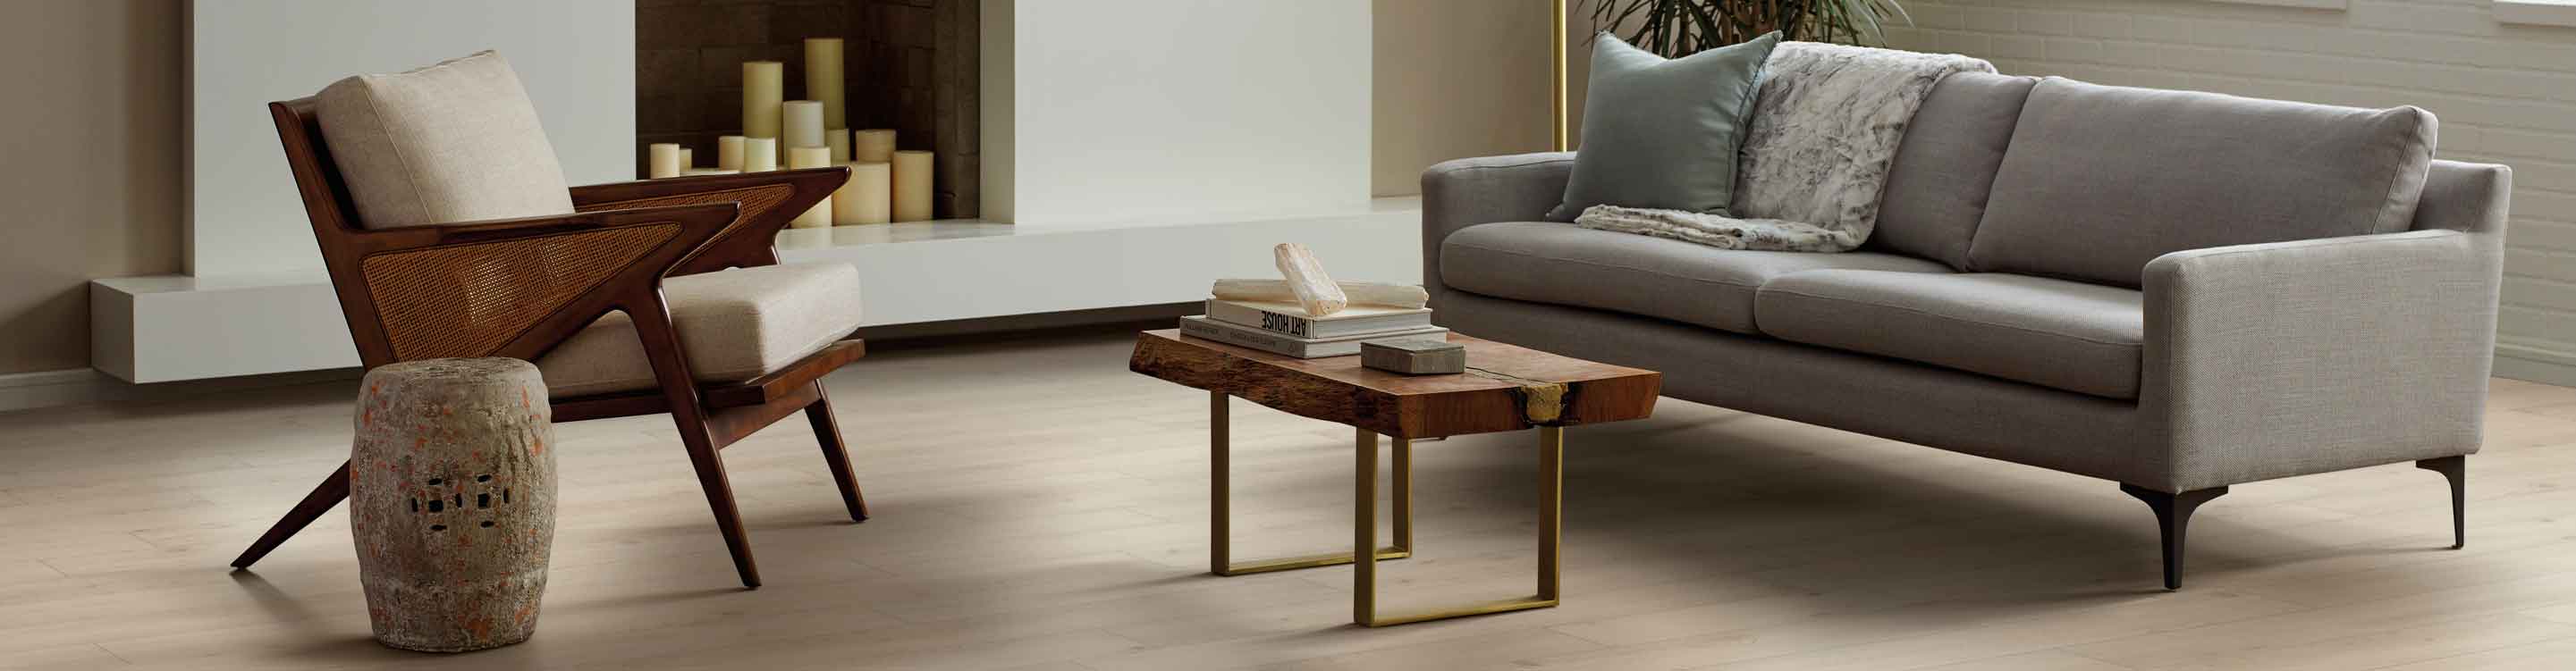 light wood look vinyl flooring in living room